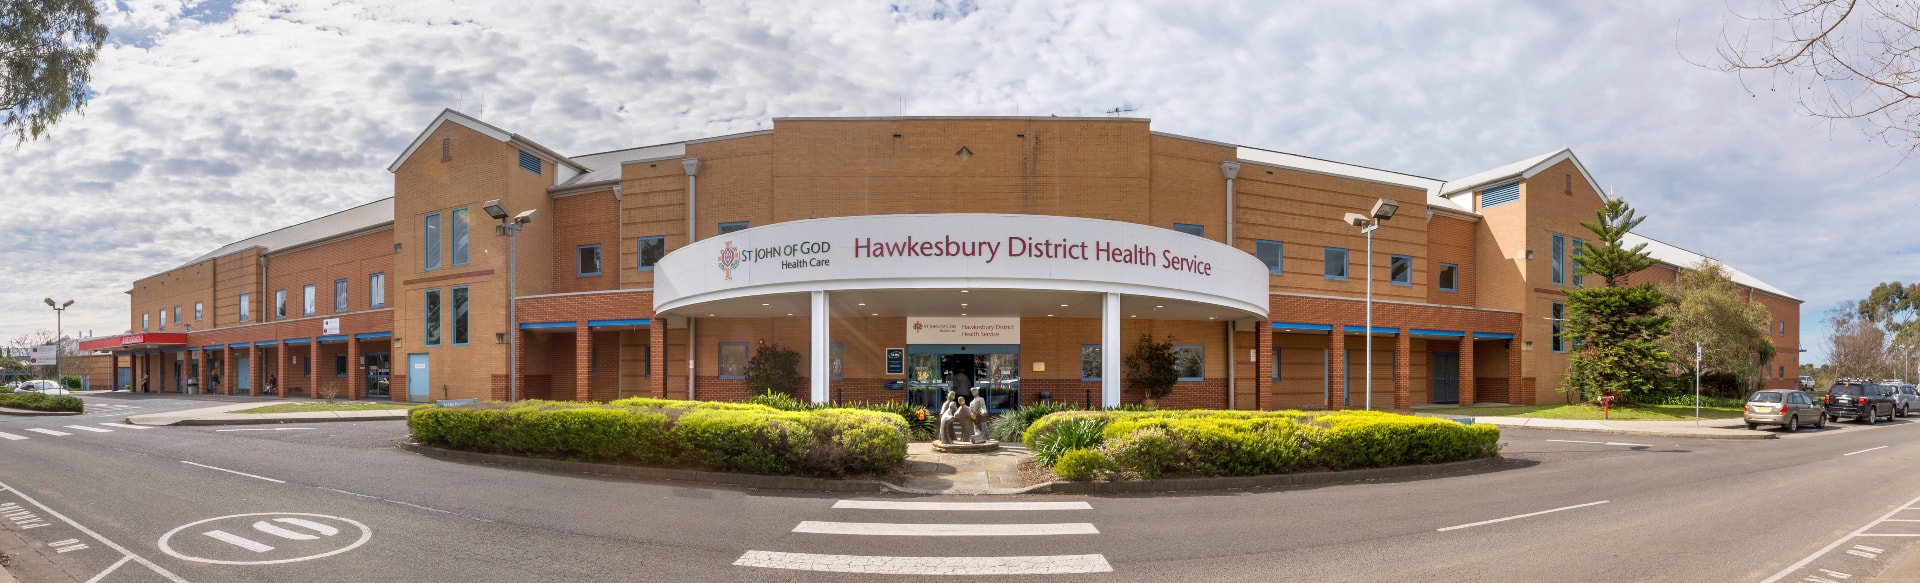 SJGHC-media_IMGLIB_Hawkesbury-District-Health-Service-facade_1920x583